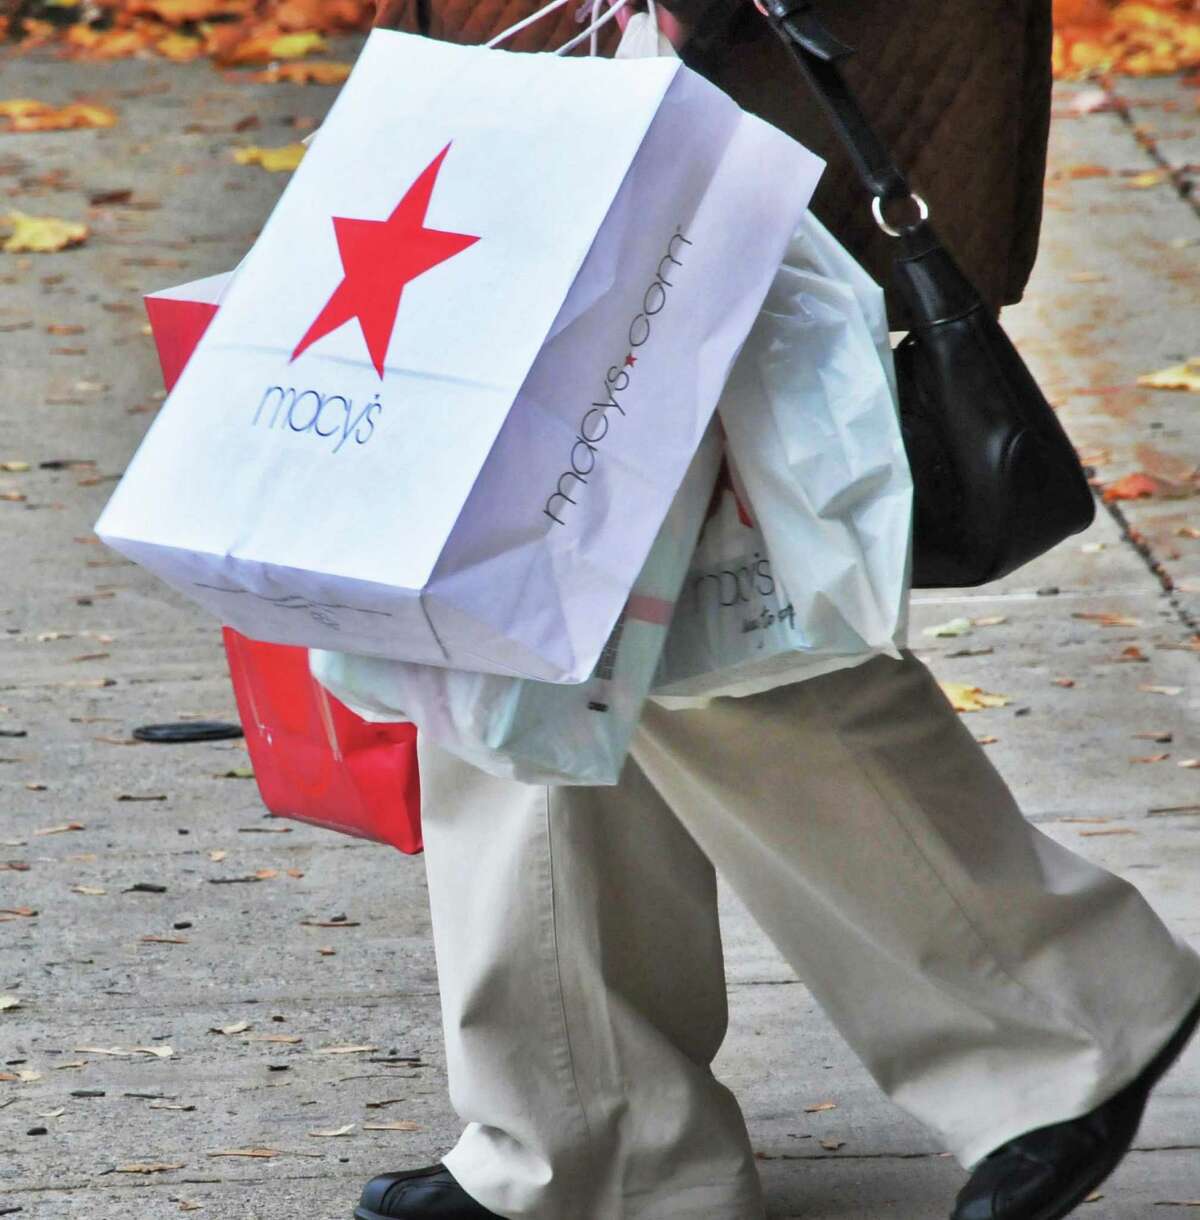 A pedestrian carries a Marshalls Plc shopping bag in San Francisco